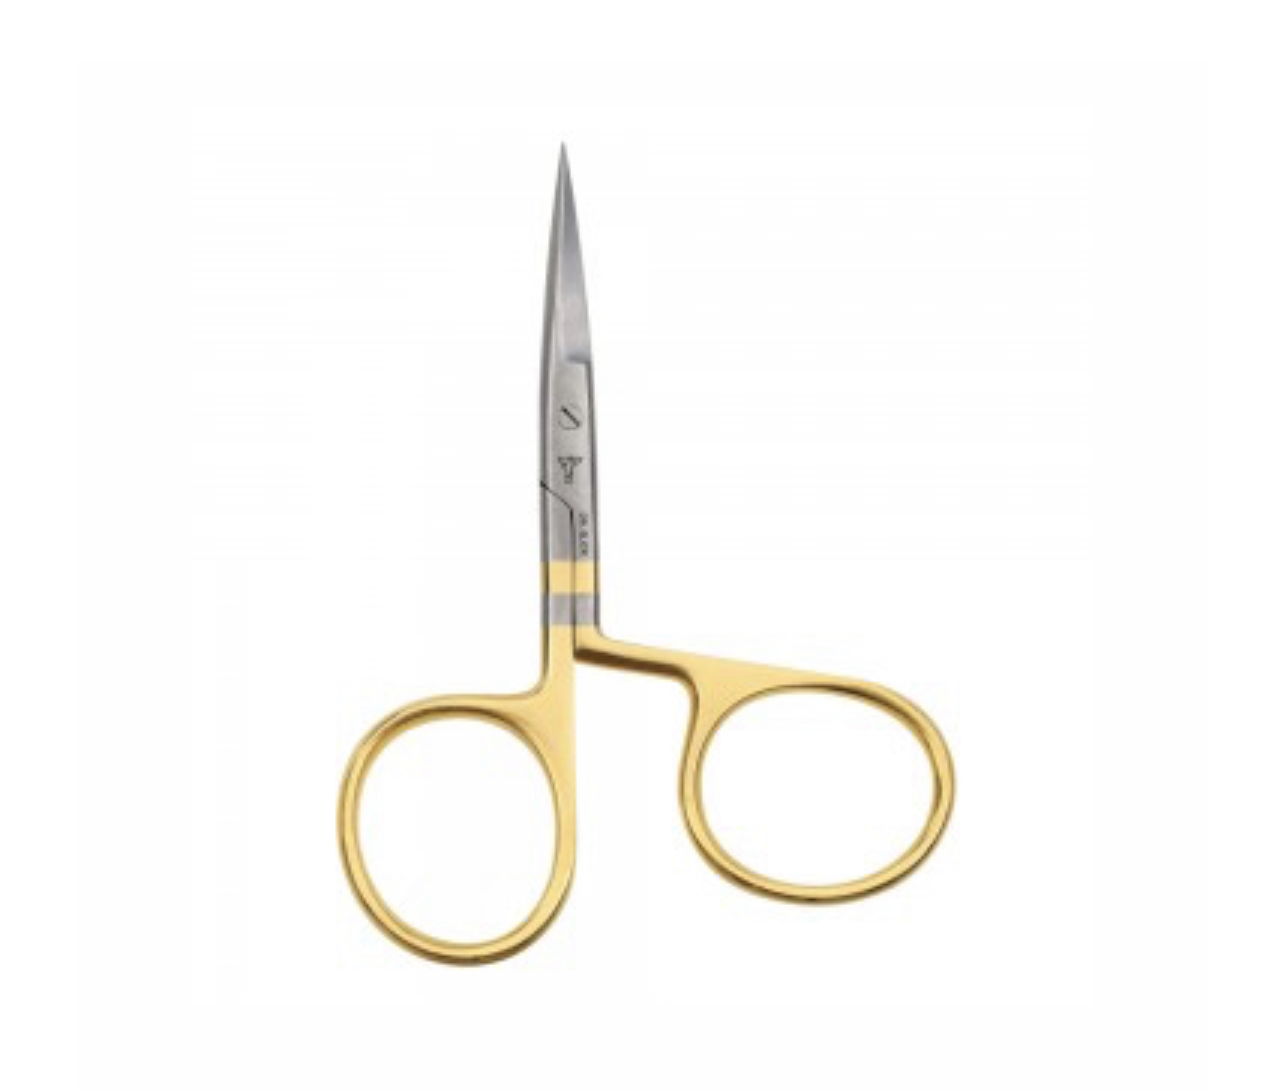 Dr. Slick Twisted Loop Scissors